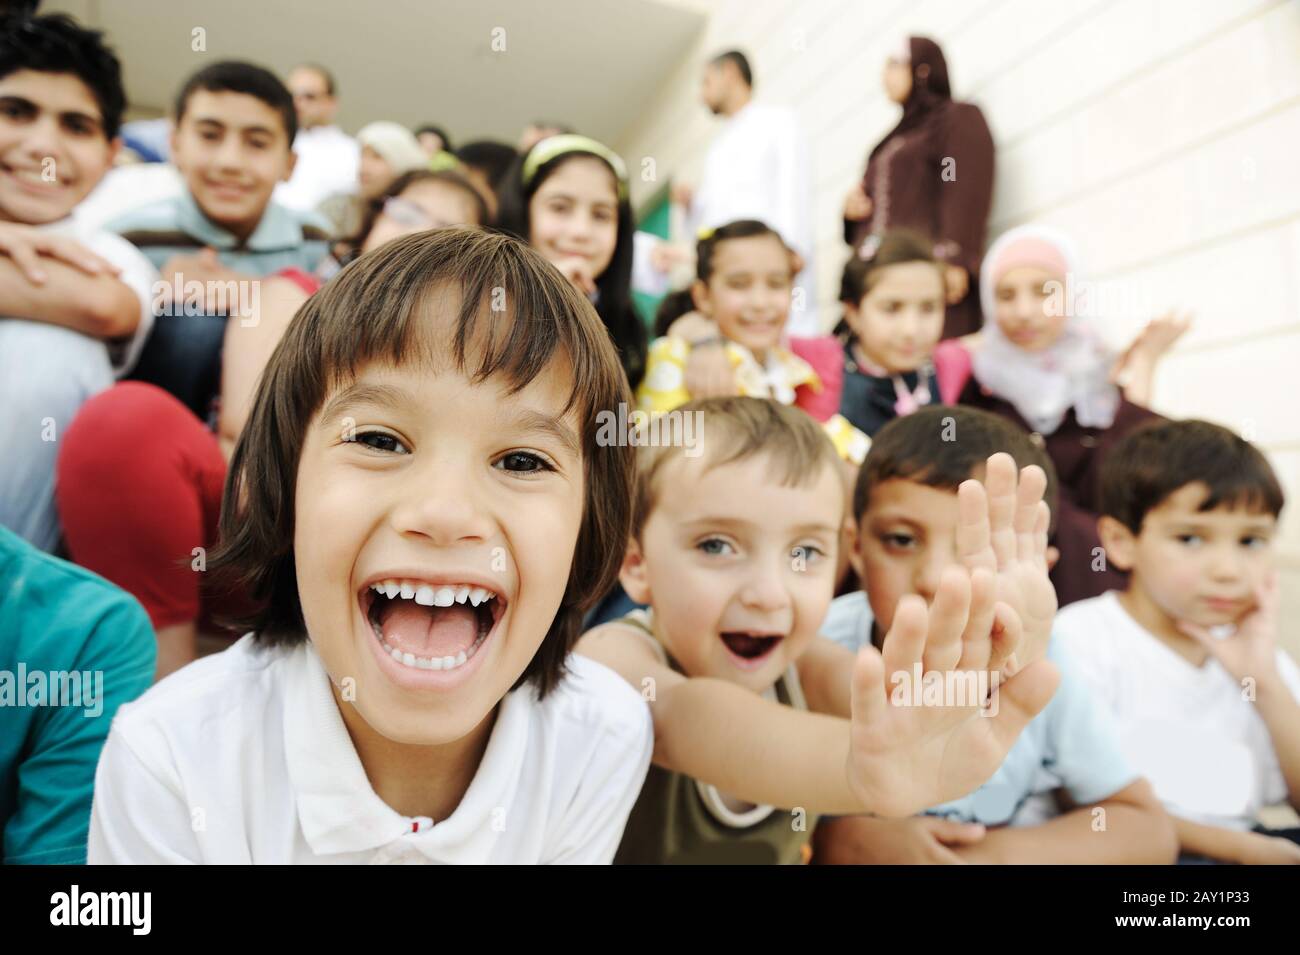 Crowd of children Stock Photo